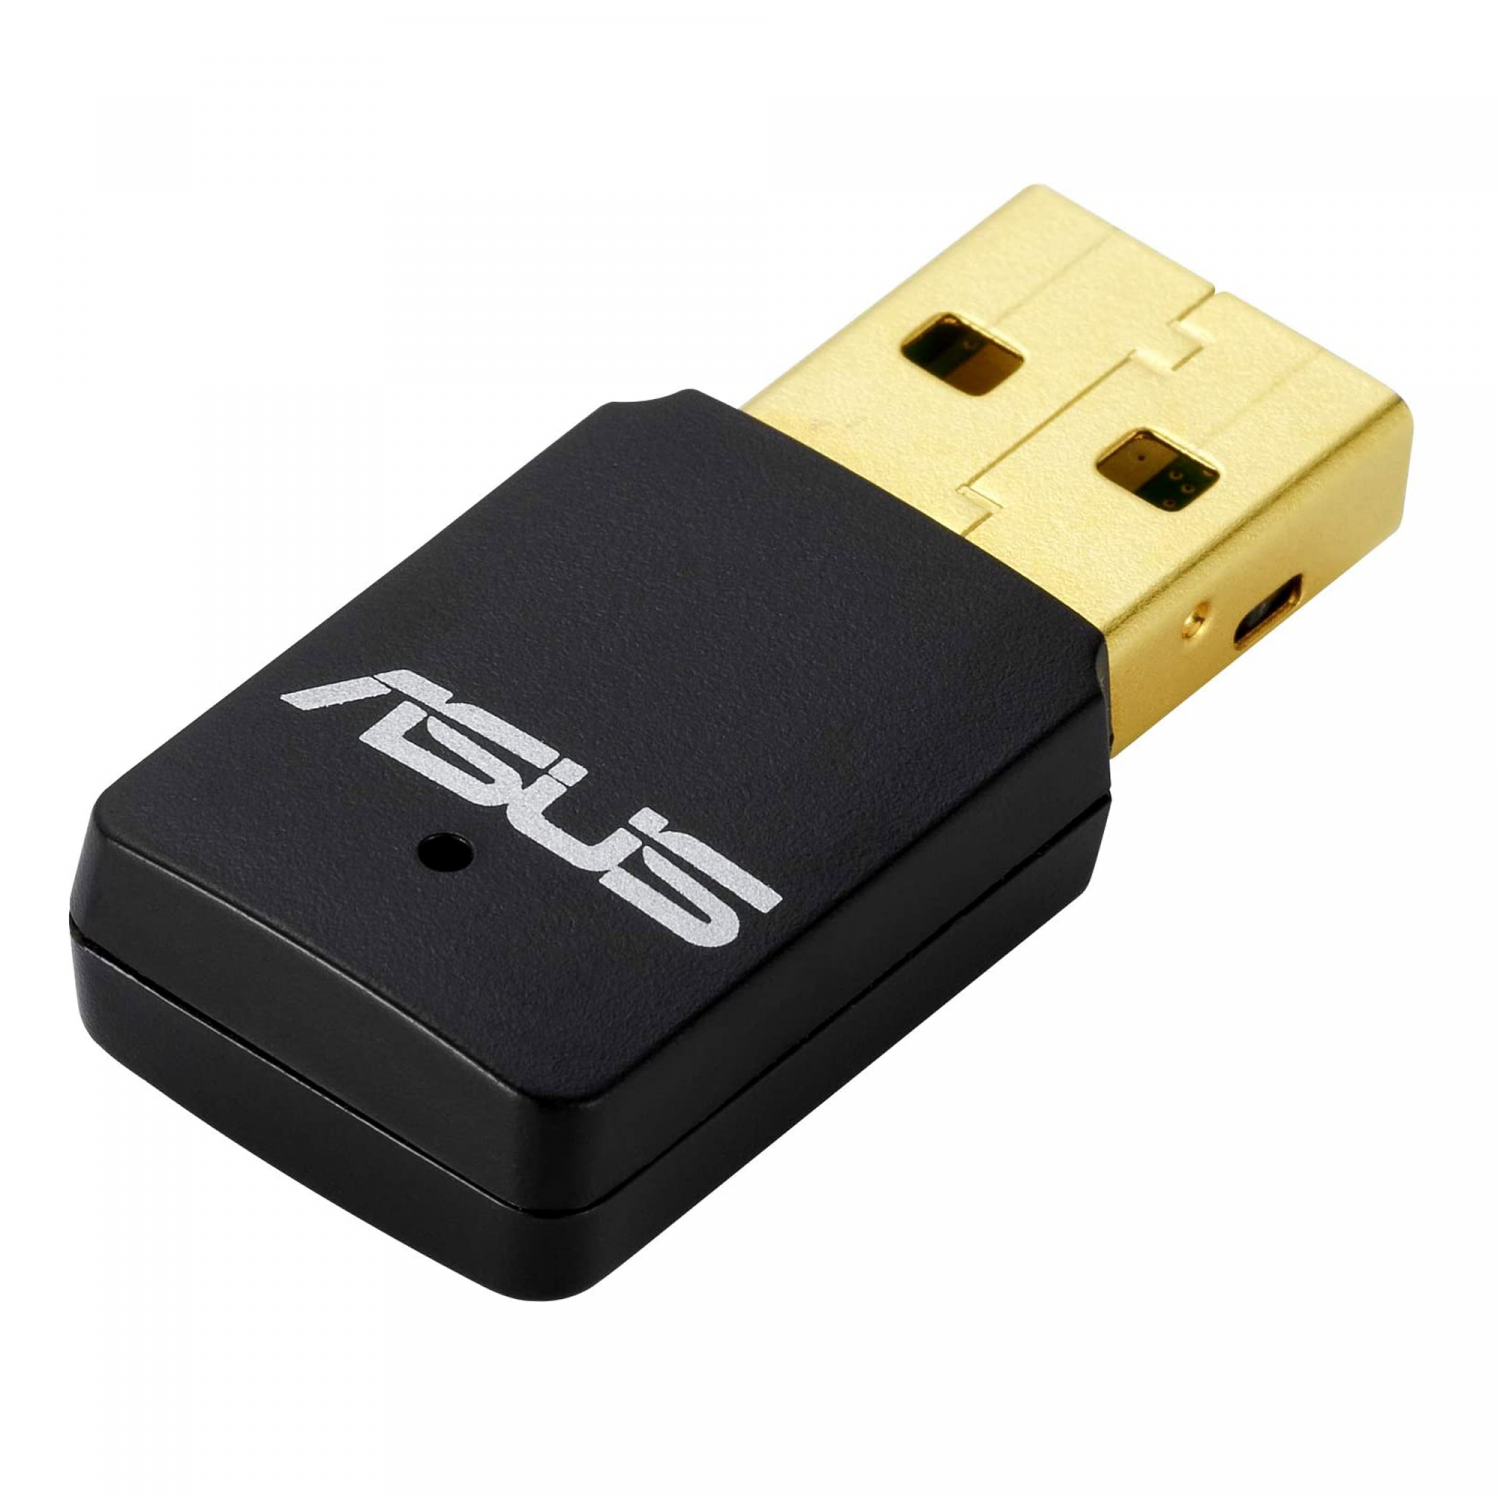 Billede af ASUS USB-N13 C1 Wireless-N300 USB-adapter